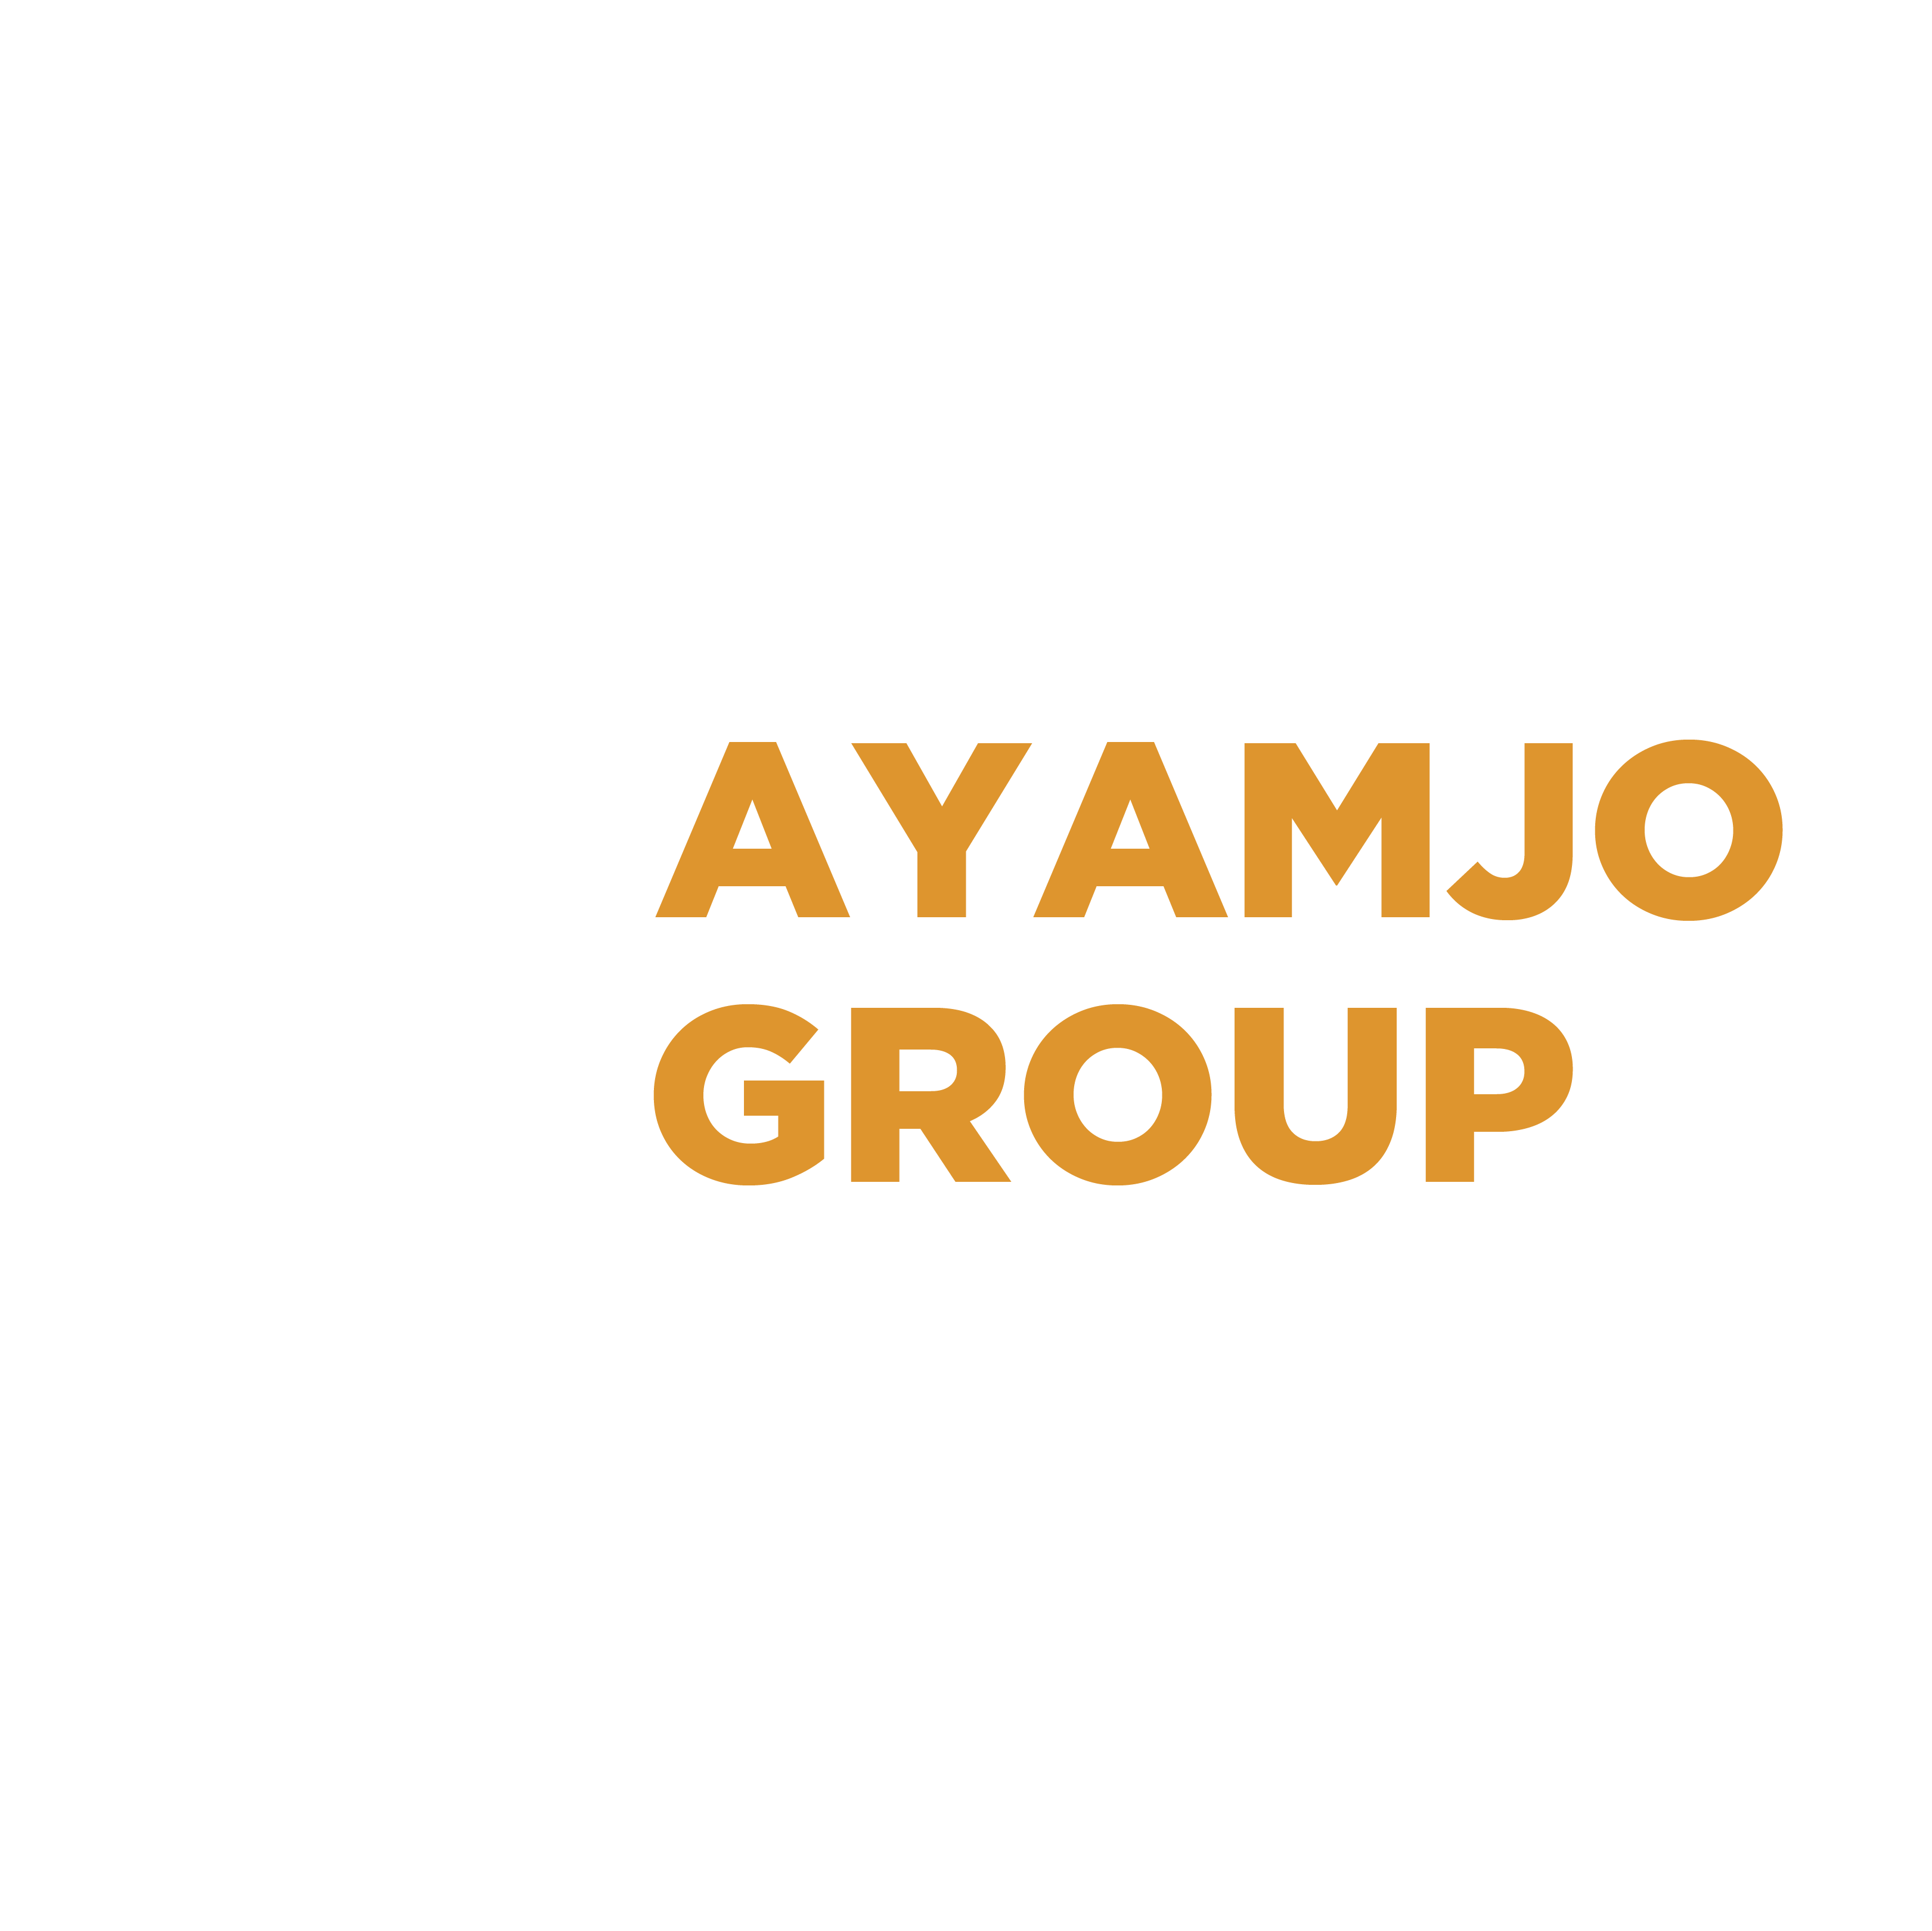 AYAMJO GROUP